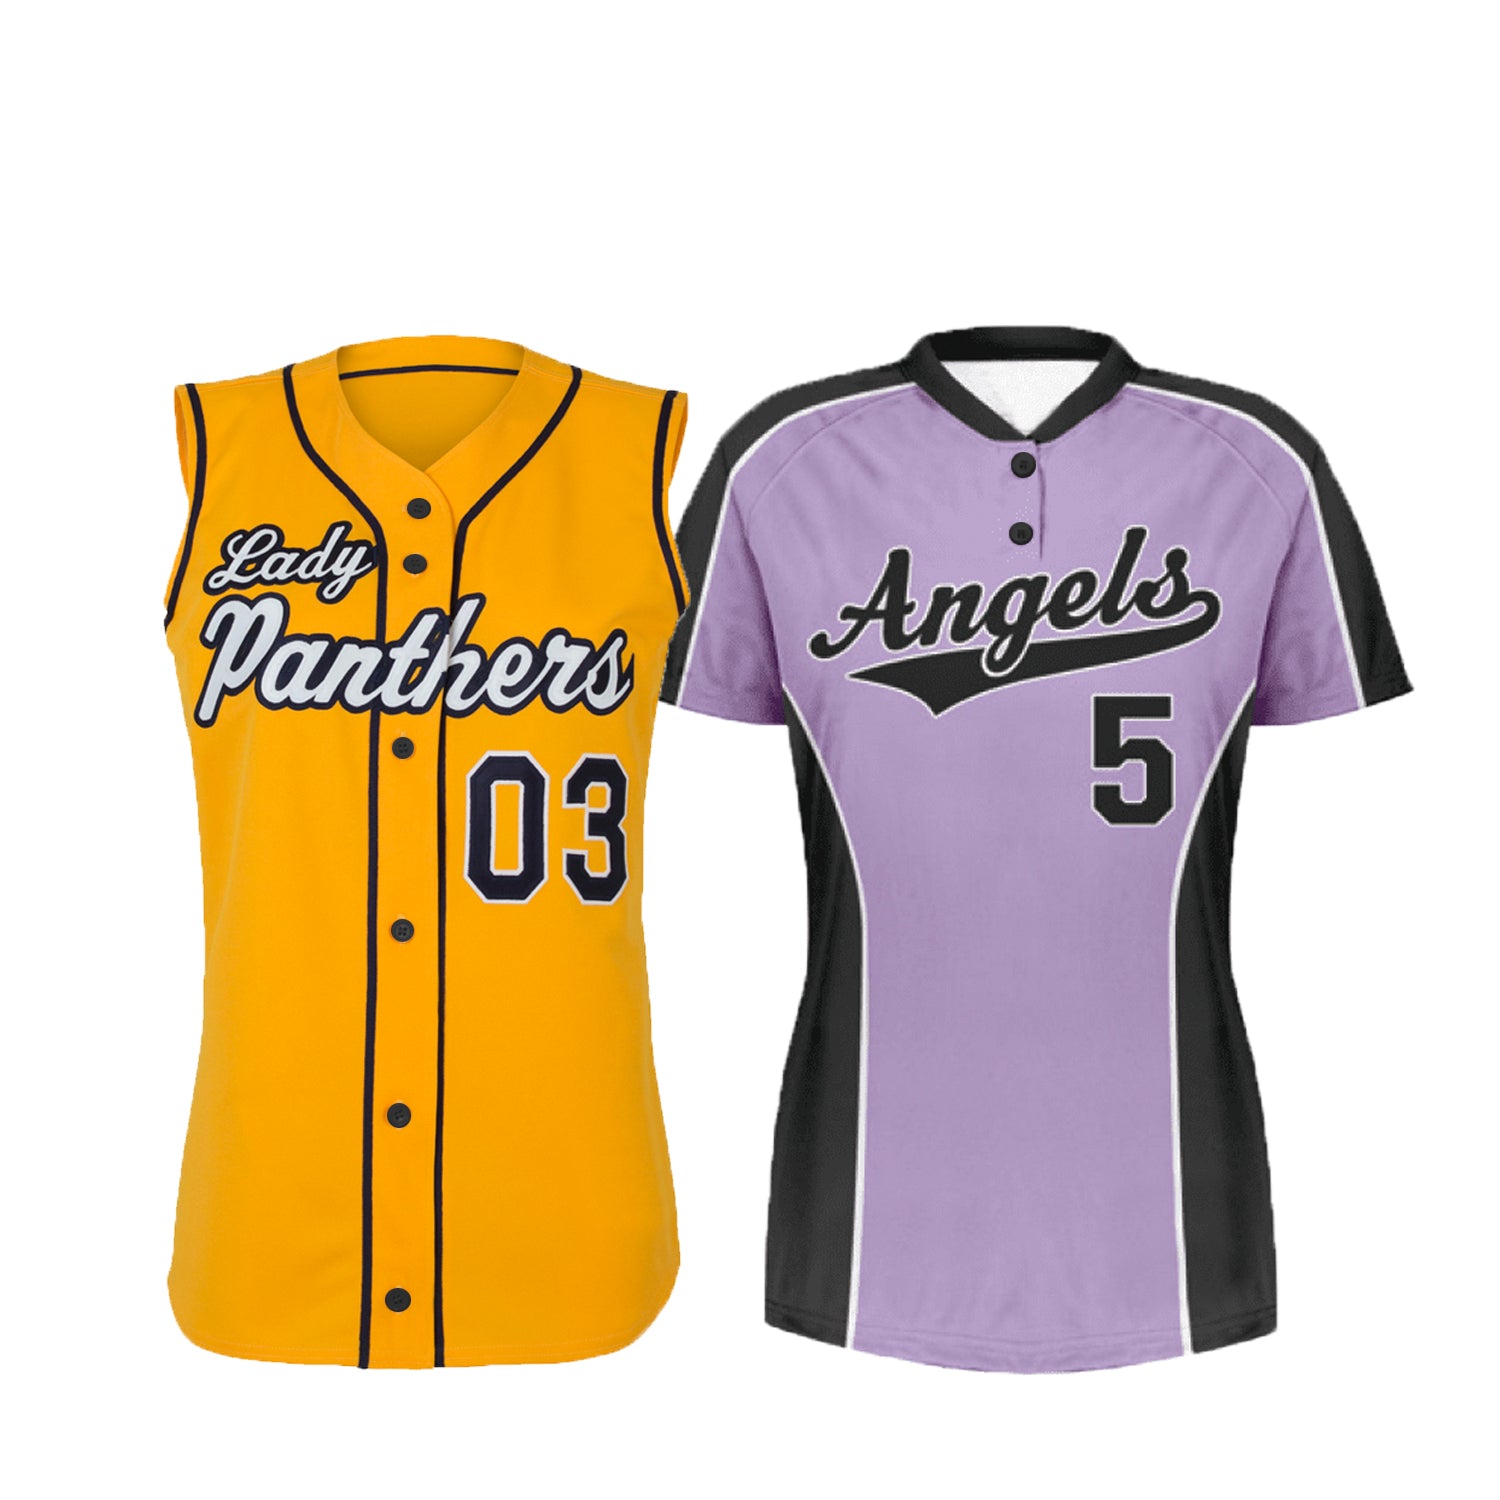 Your Custom Design Softball Uniform - Made in America